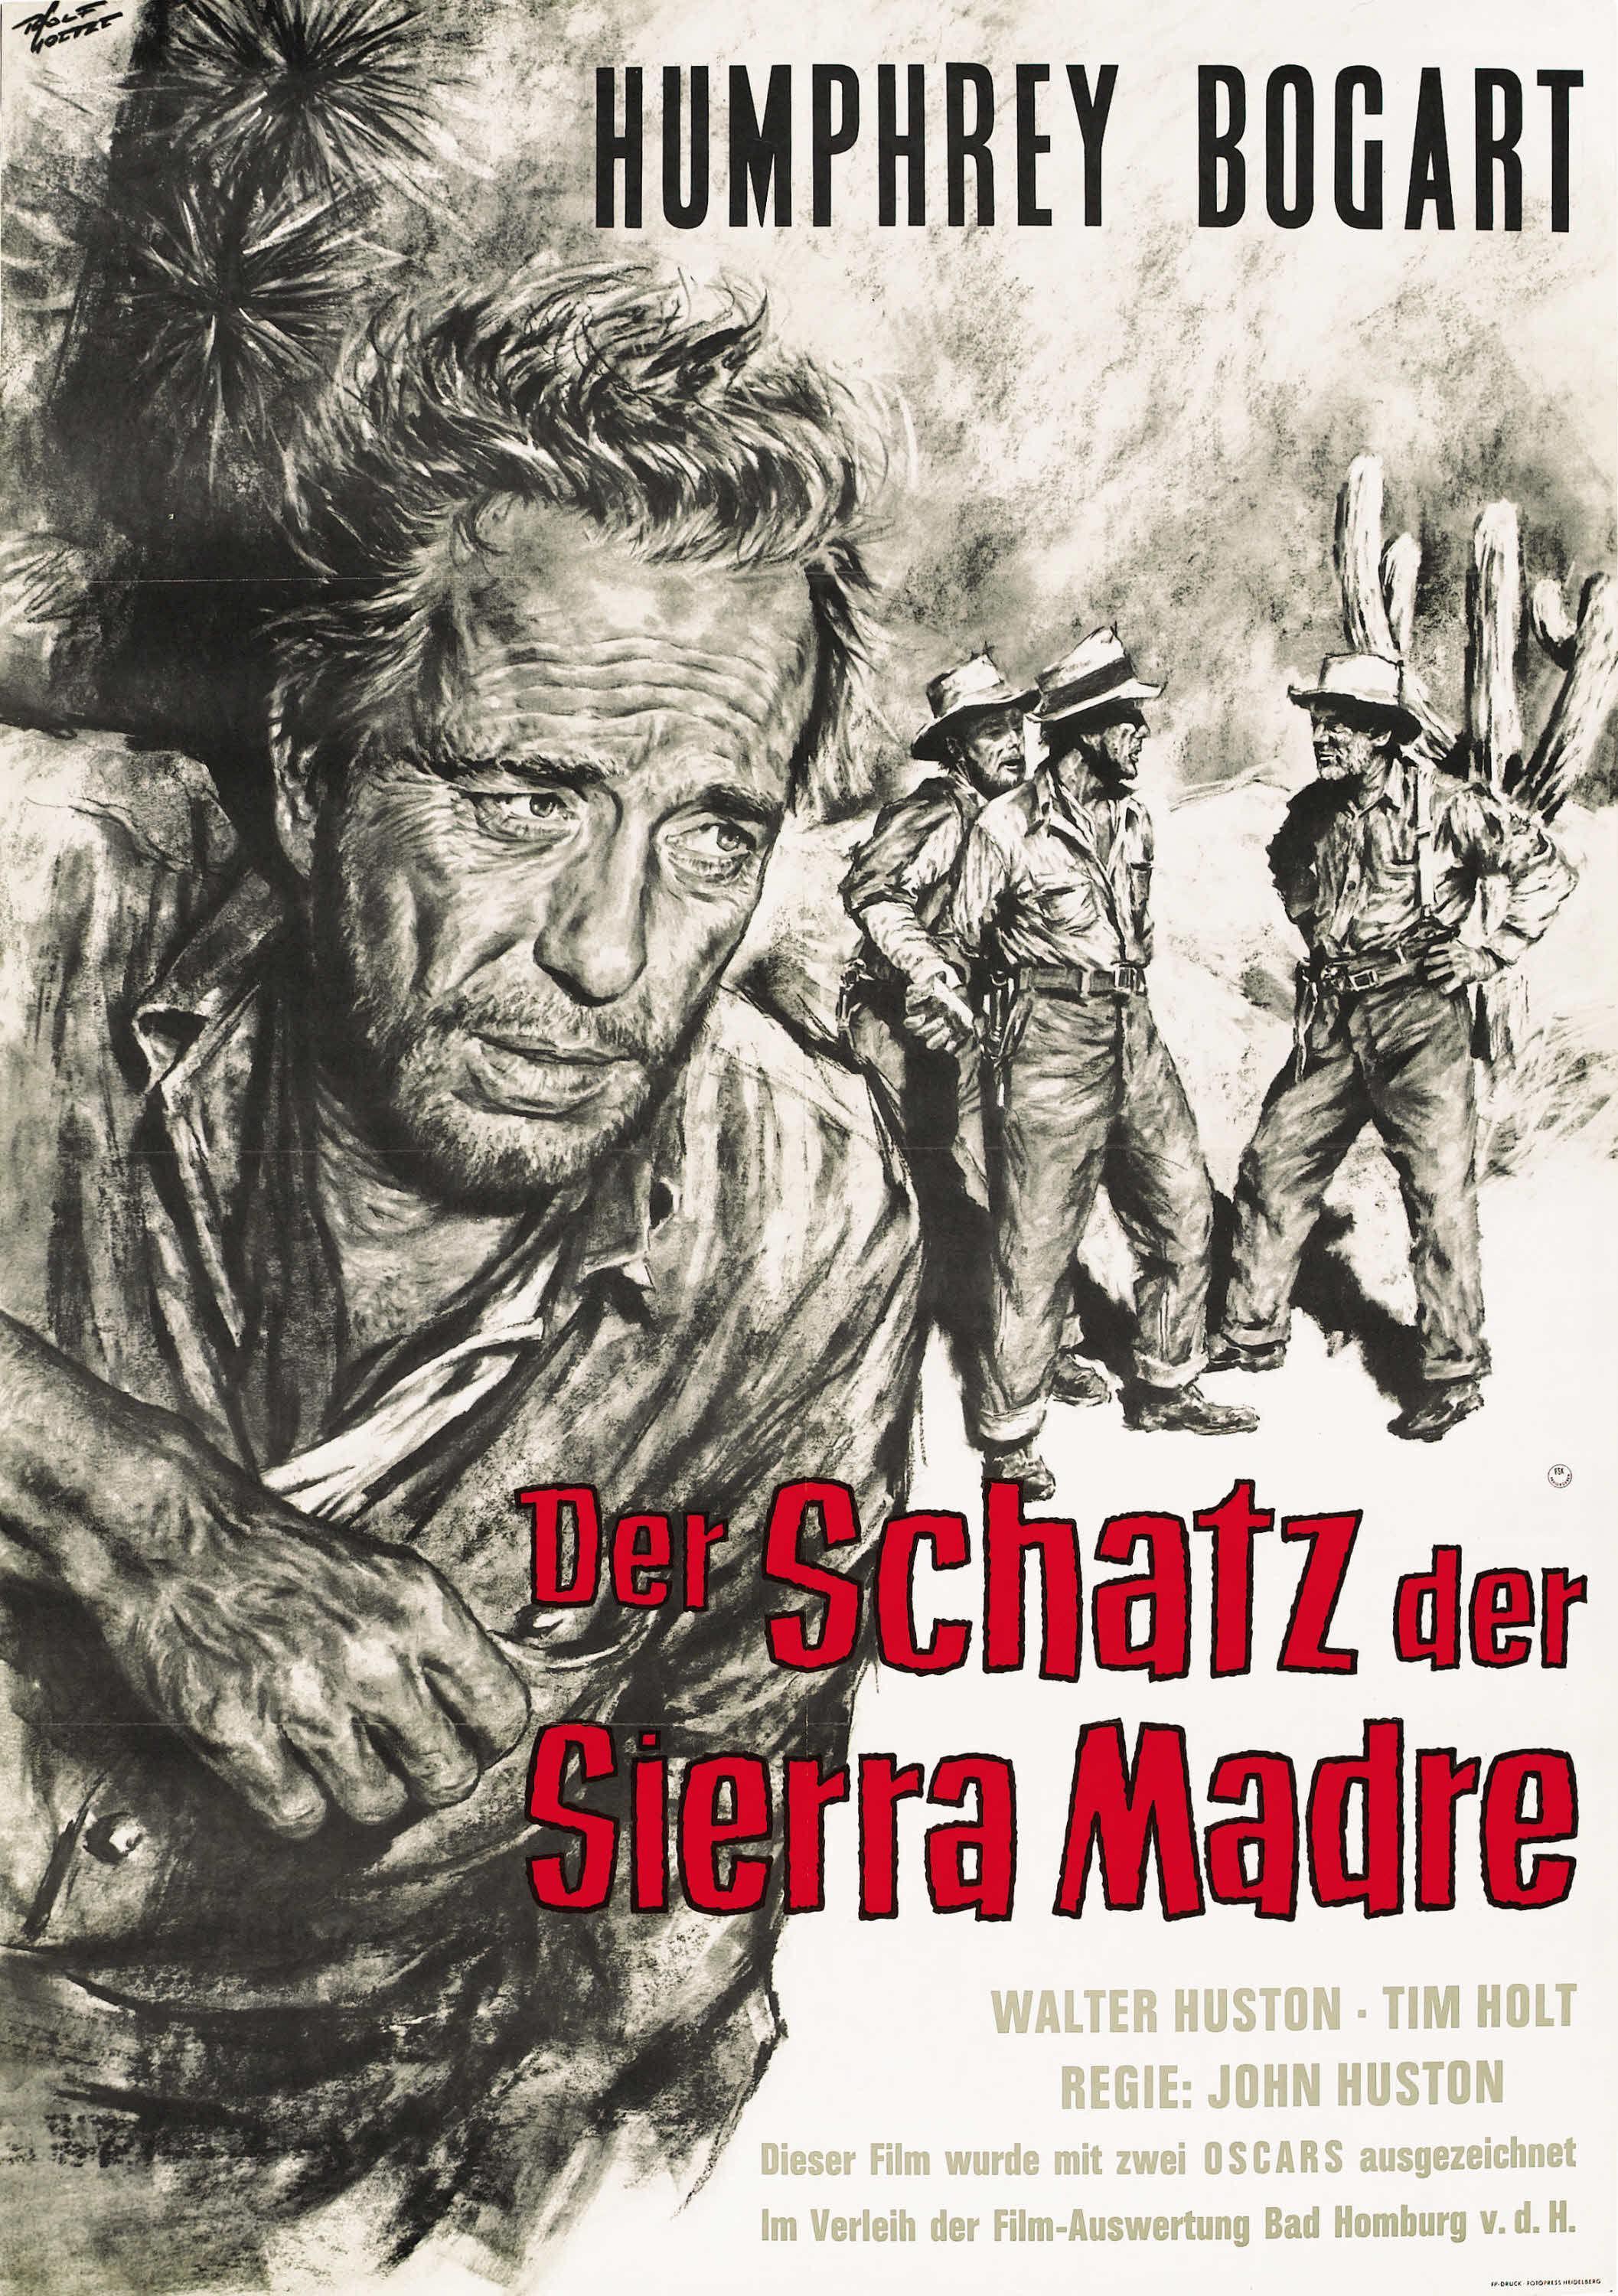 Постер фильма Сокровища Сьерра Мадре | Treasure of the Sierra Madre